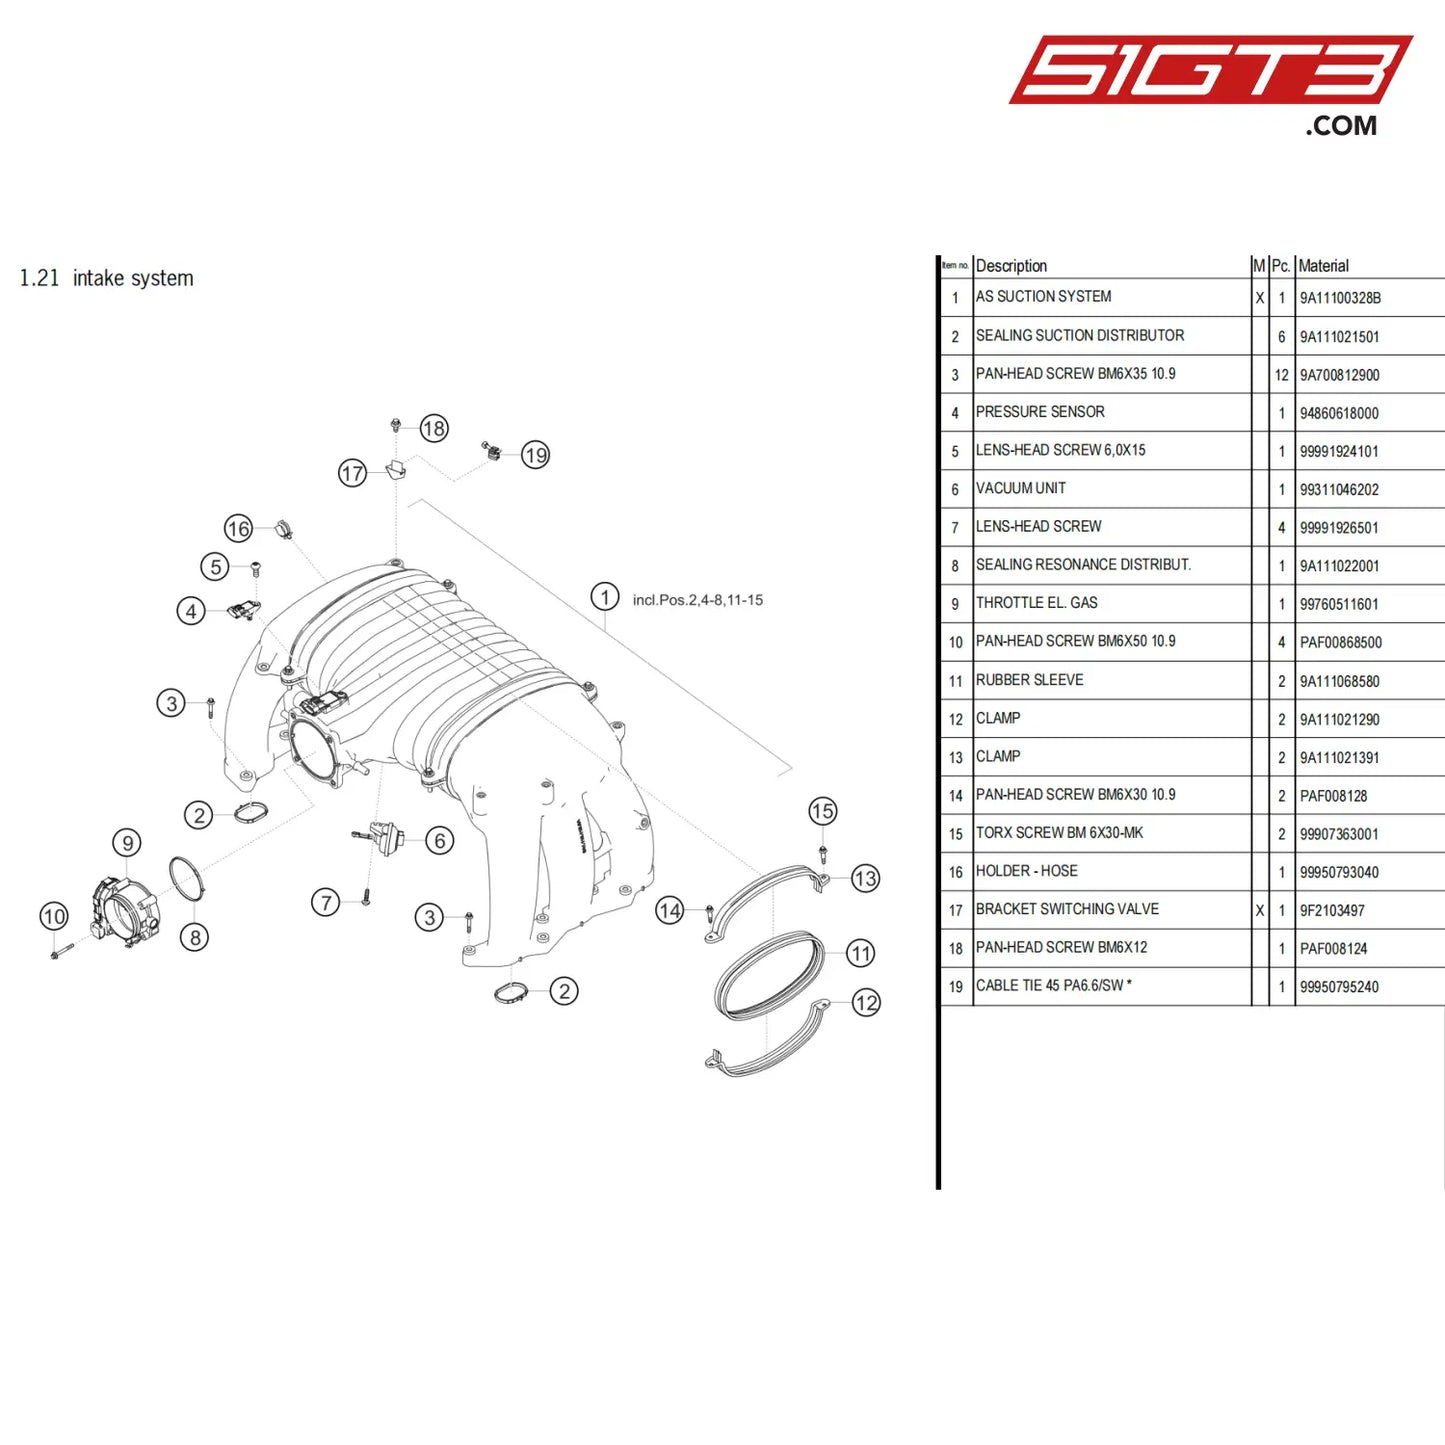 Vacuum Unit - 99311046202 [Porsche 718 Cayman Gt4 Clubsport] Intake System